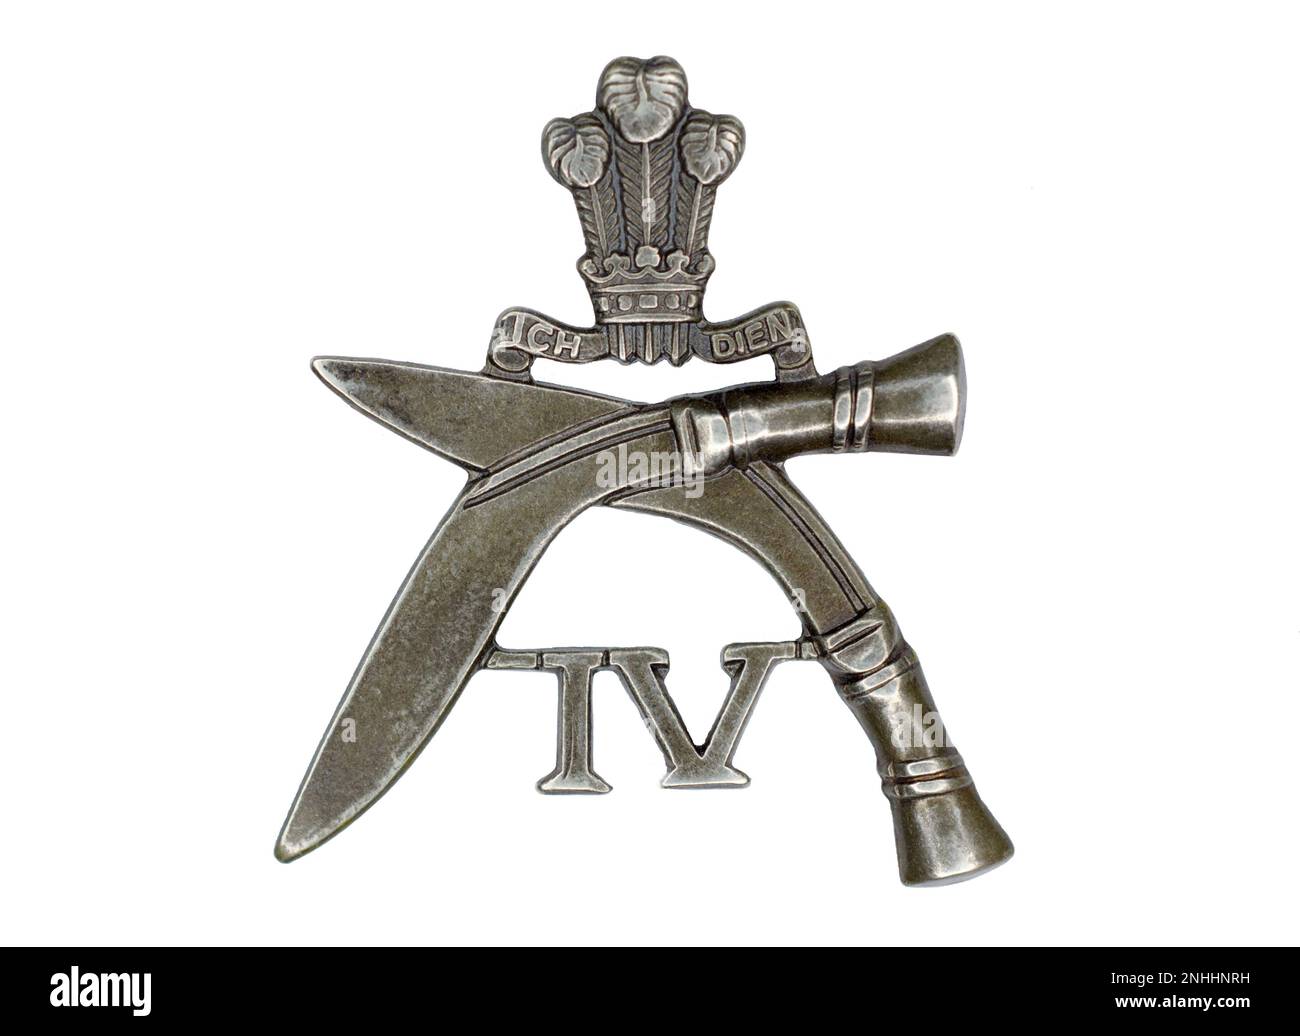 4th Prince of Wales's Own Gurkha Rifles cap badge C. 1924-1947. Stock Photo